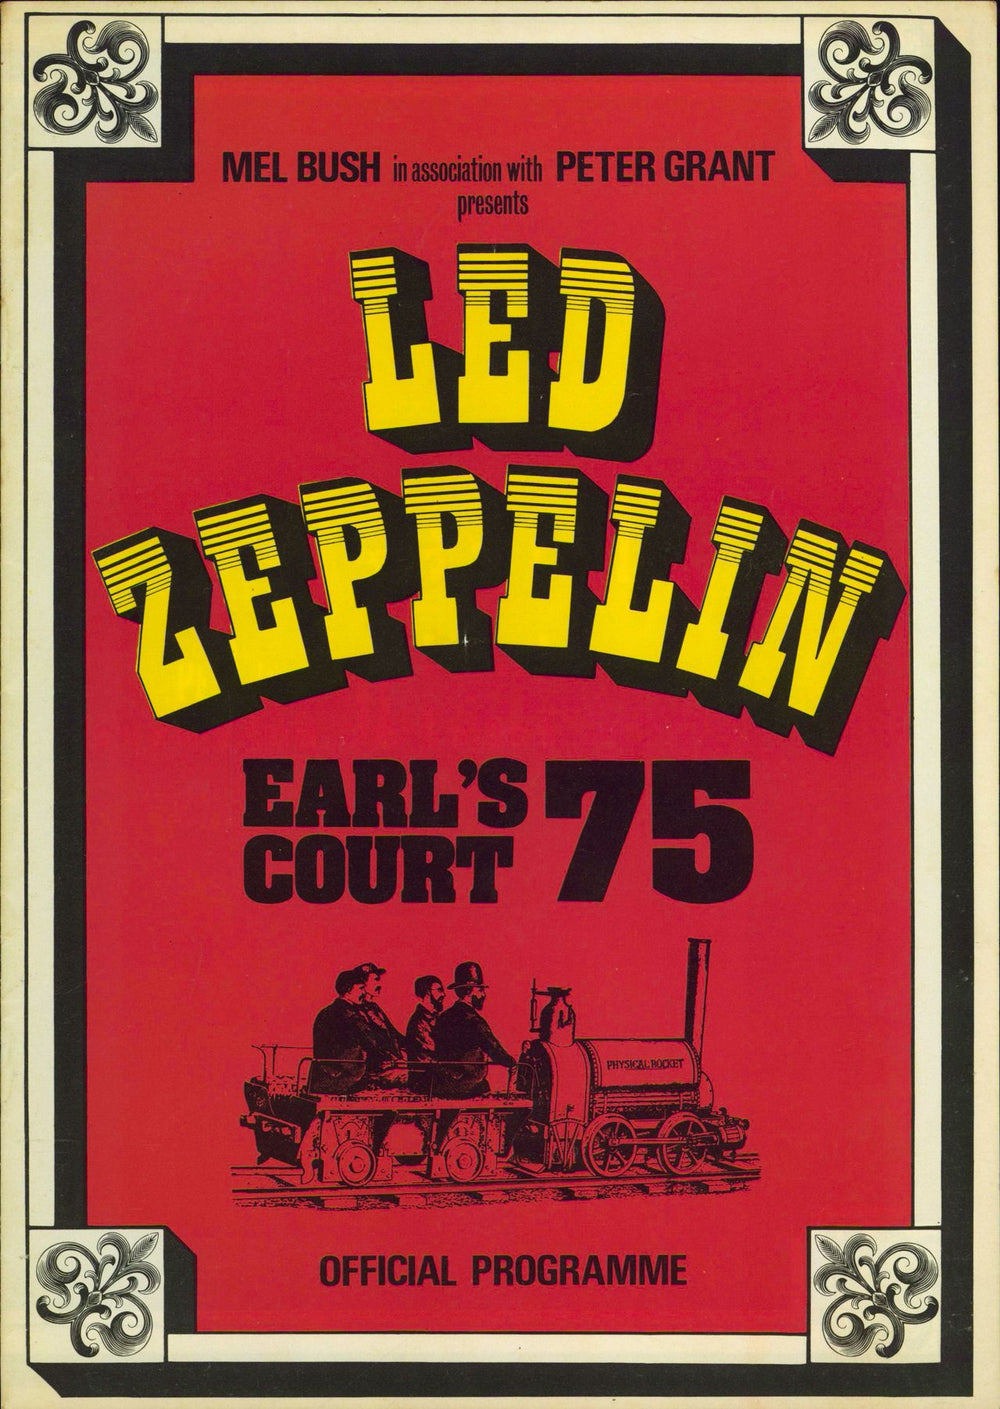 Led Zeppelin Earl's Court 75 + 17th Ticket UK tour programme TOUR PROGRAMME